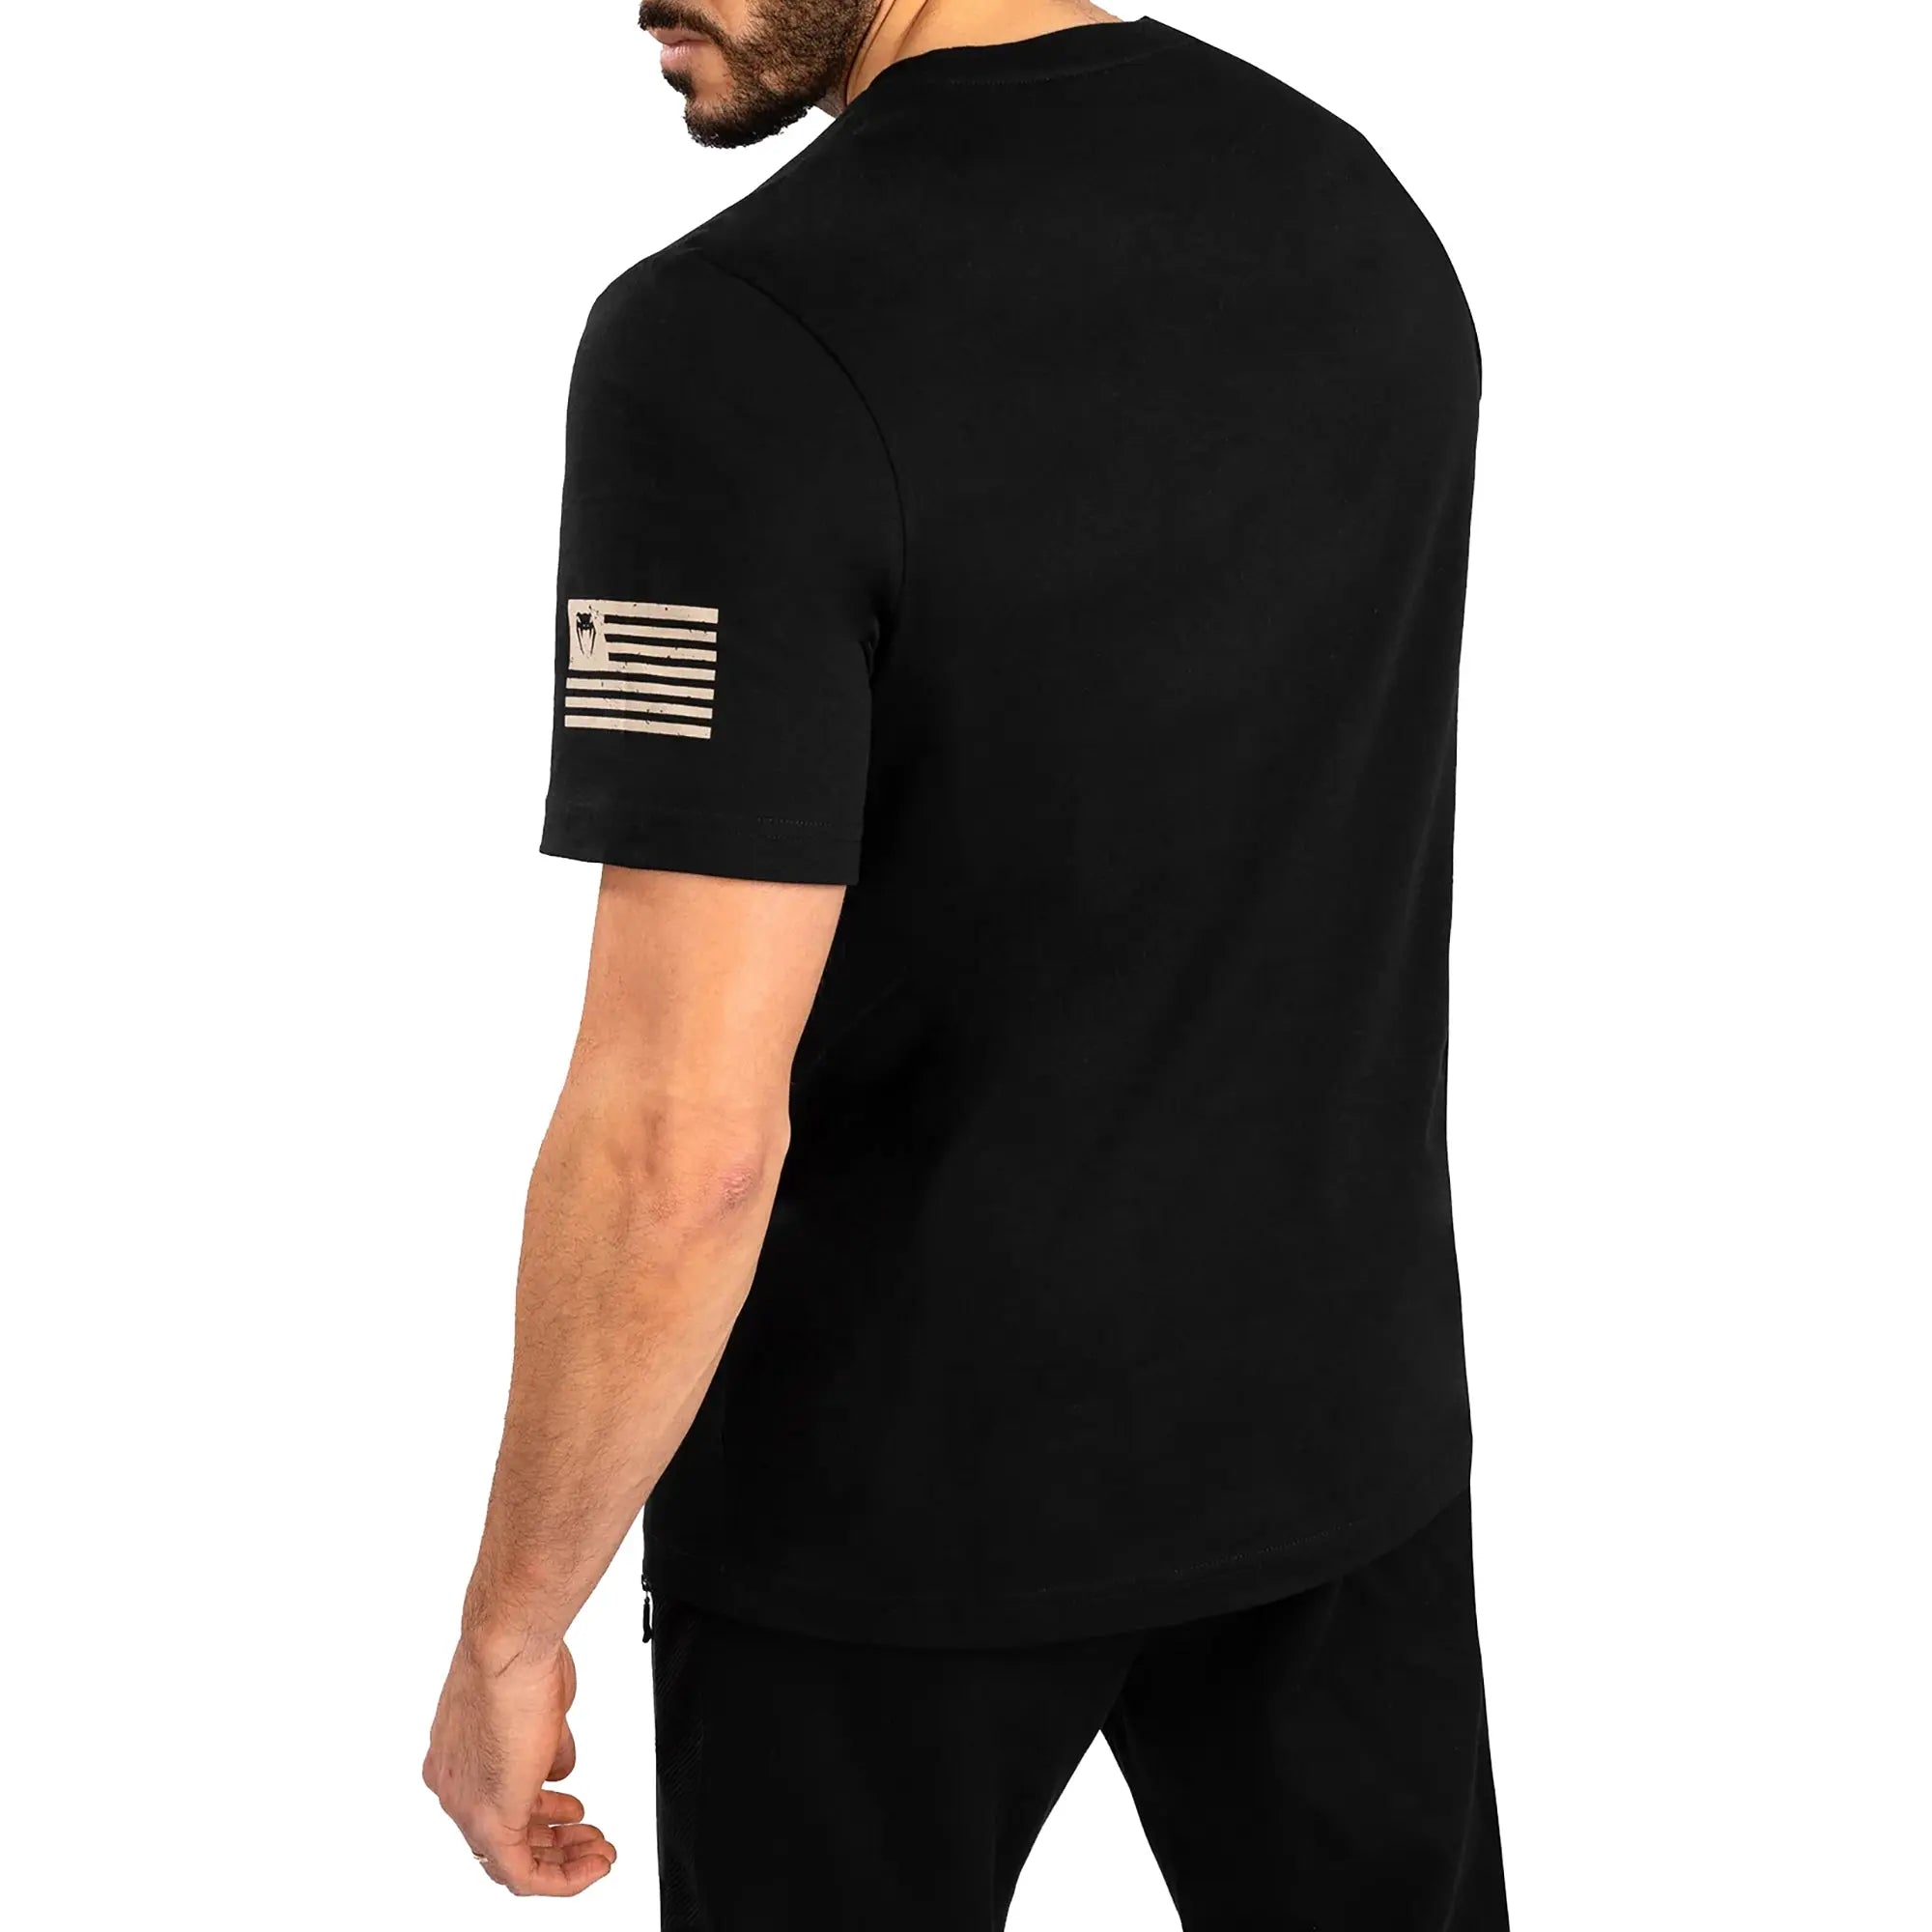 Venum Giant USA T-Shirt - Black Venum